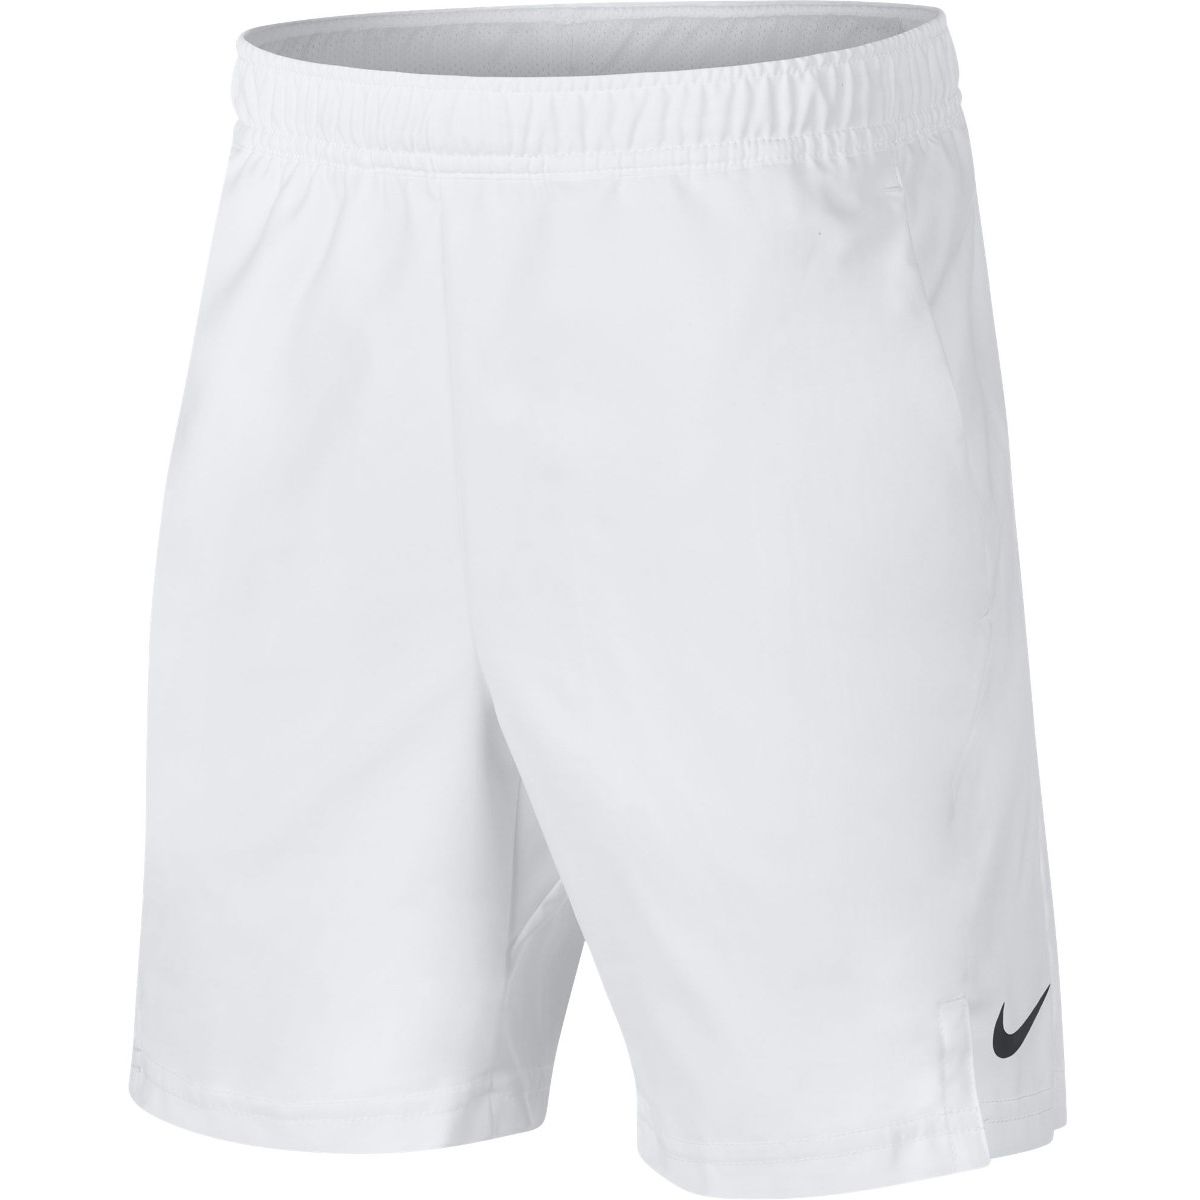 NikeCourt Dry Boy's Tennis Short AR2484-100